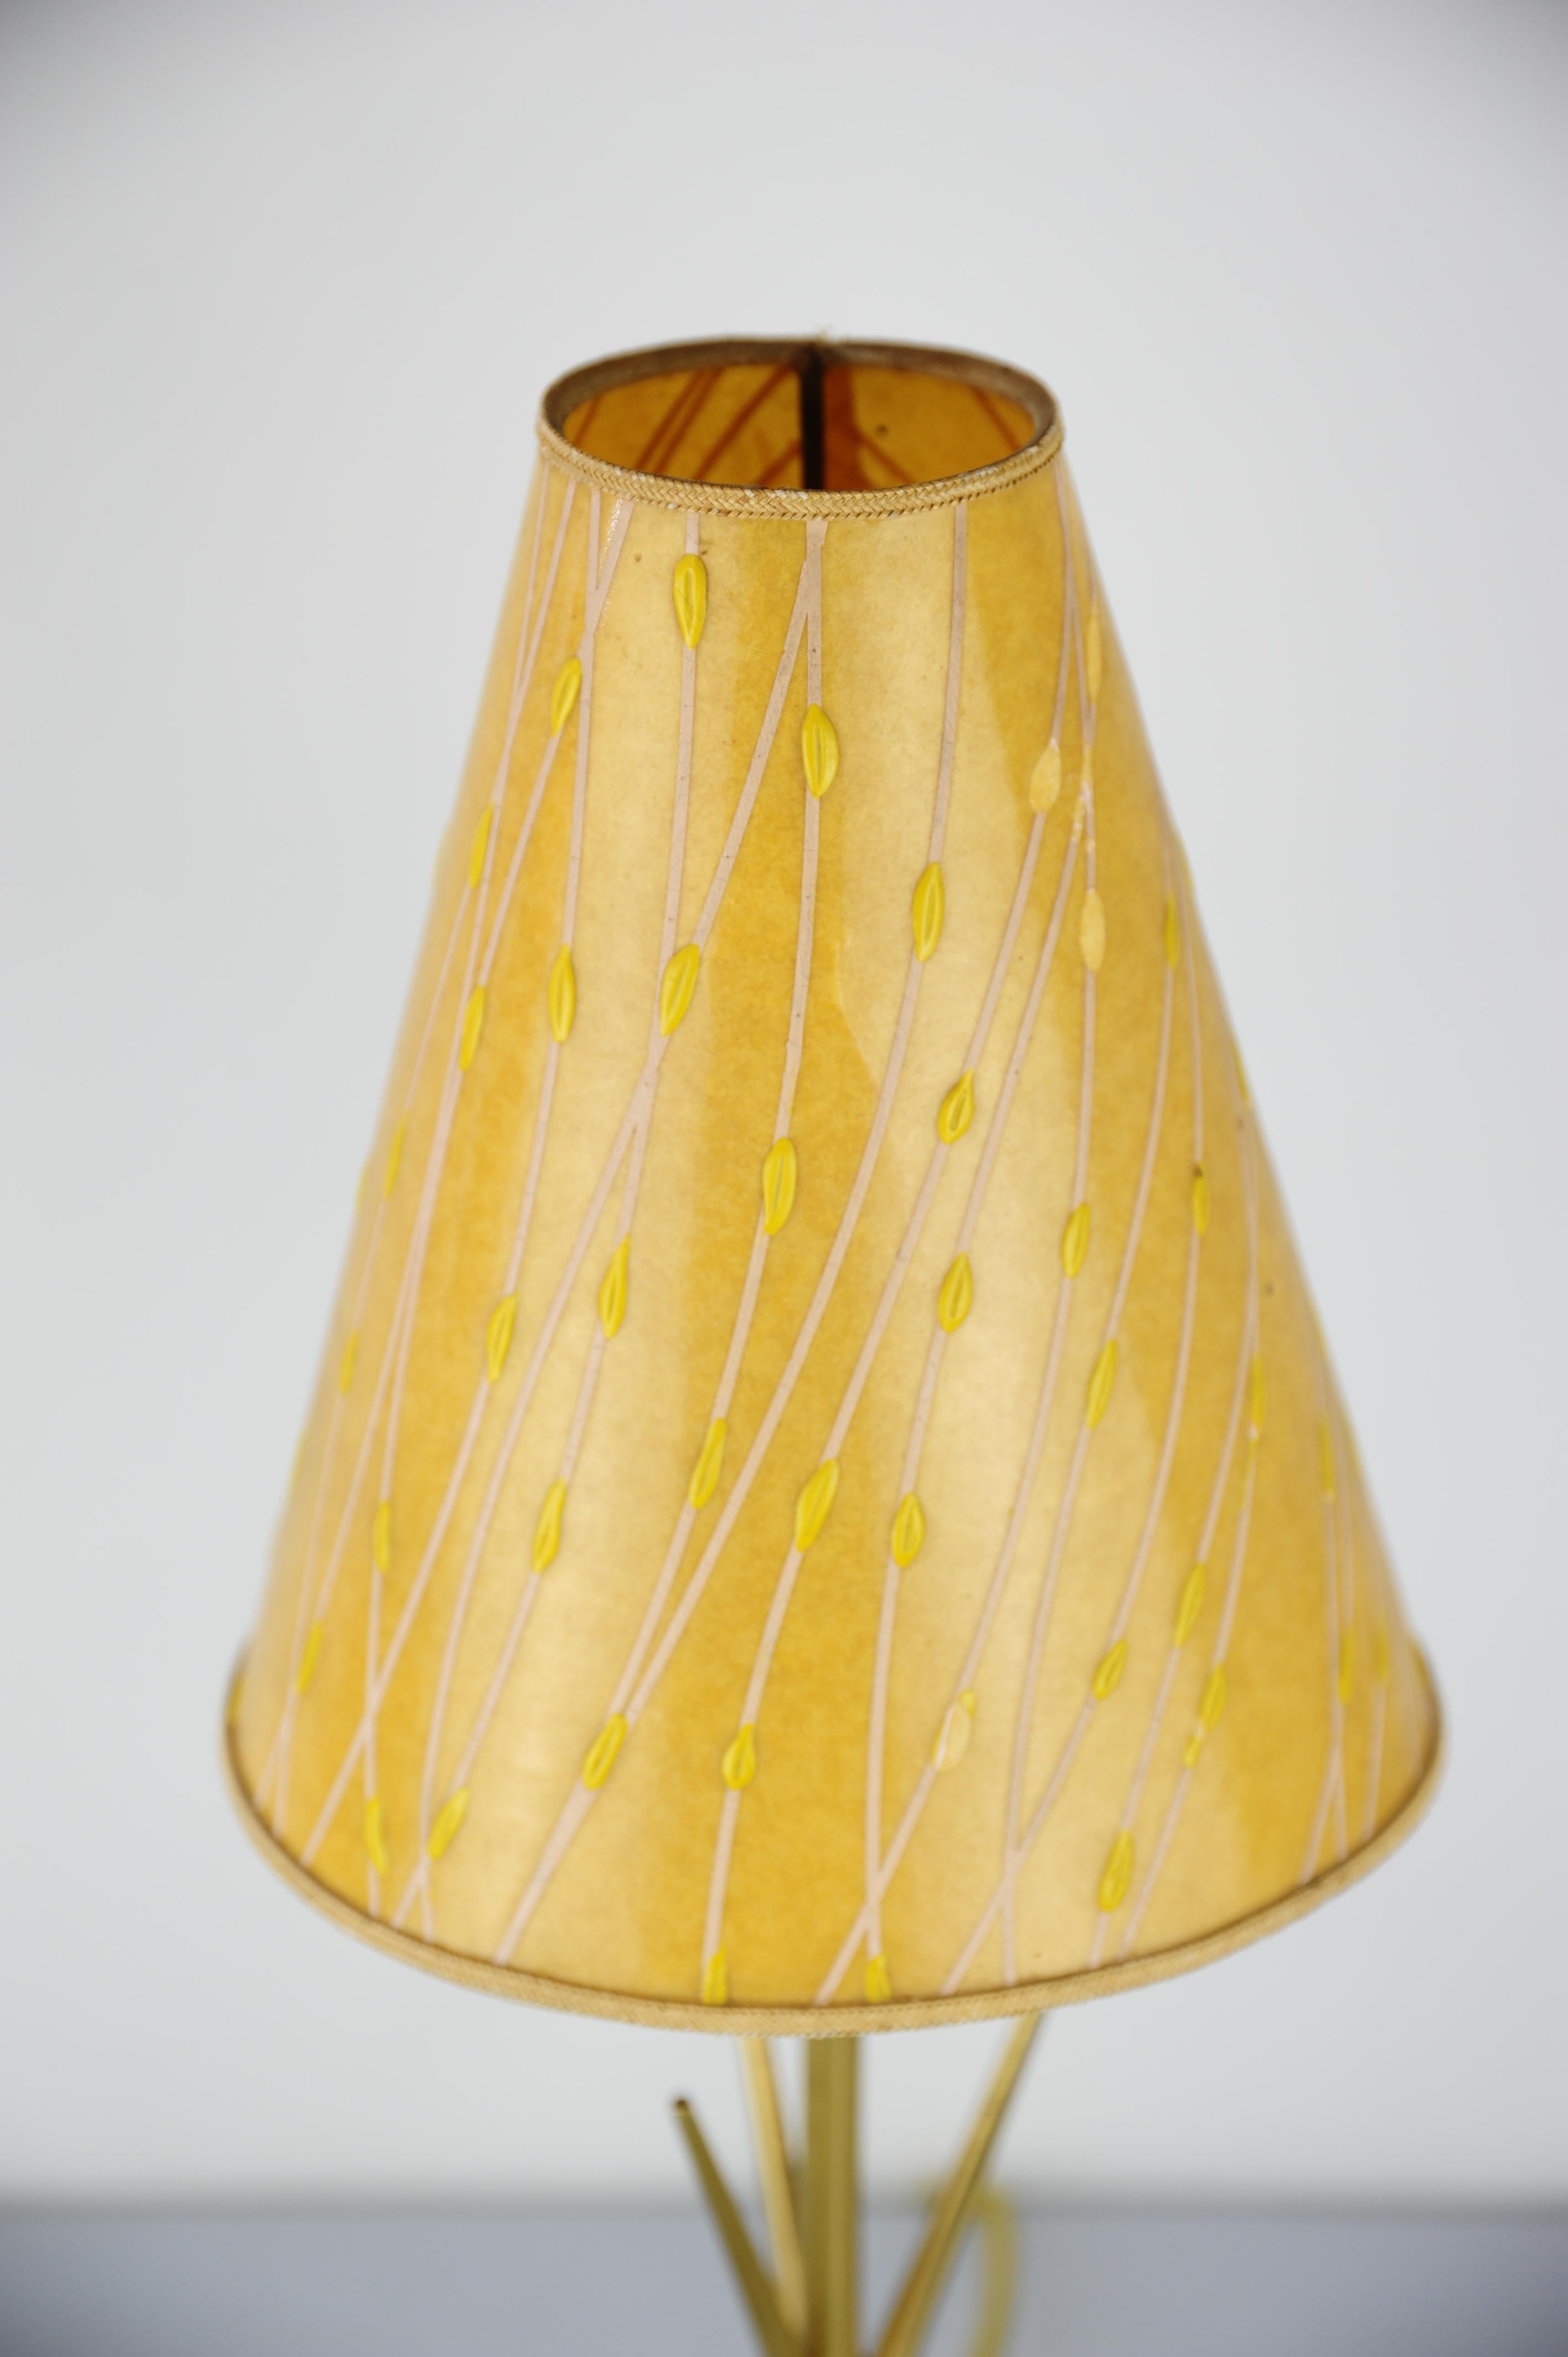 Kalmar table lamp 1950s with original shade.
Original condition.